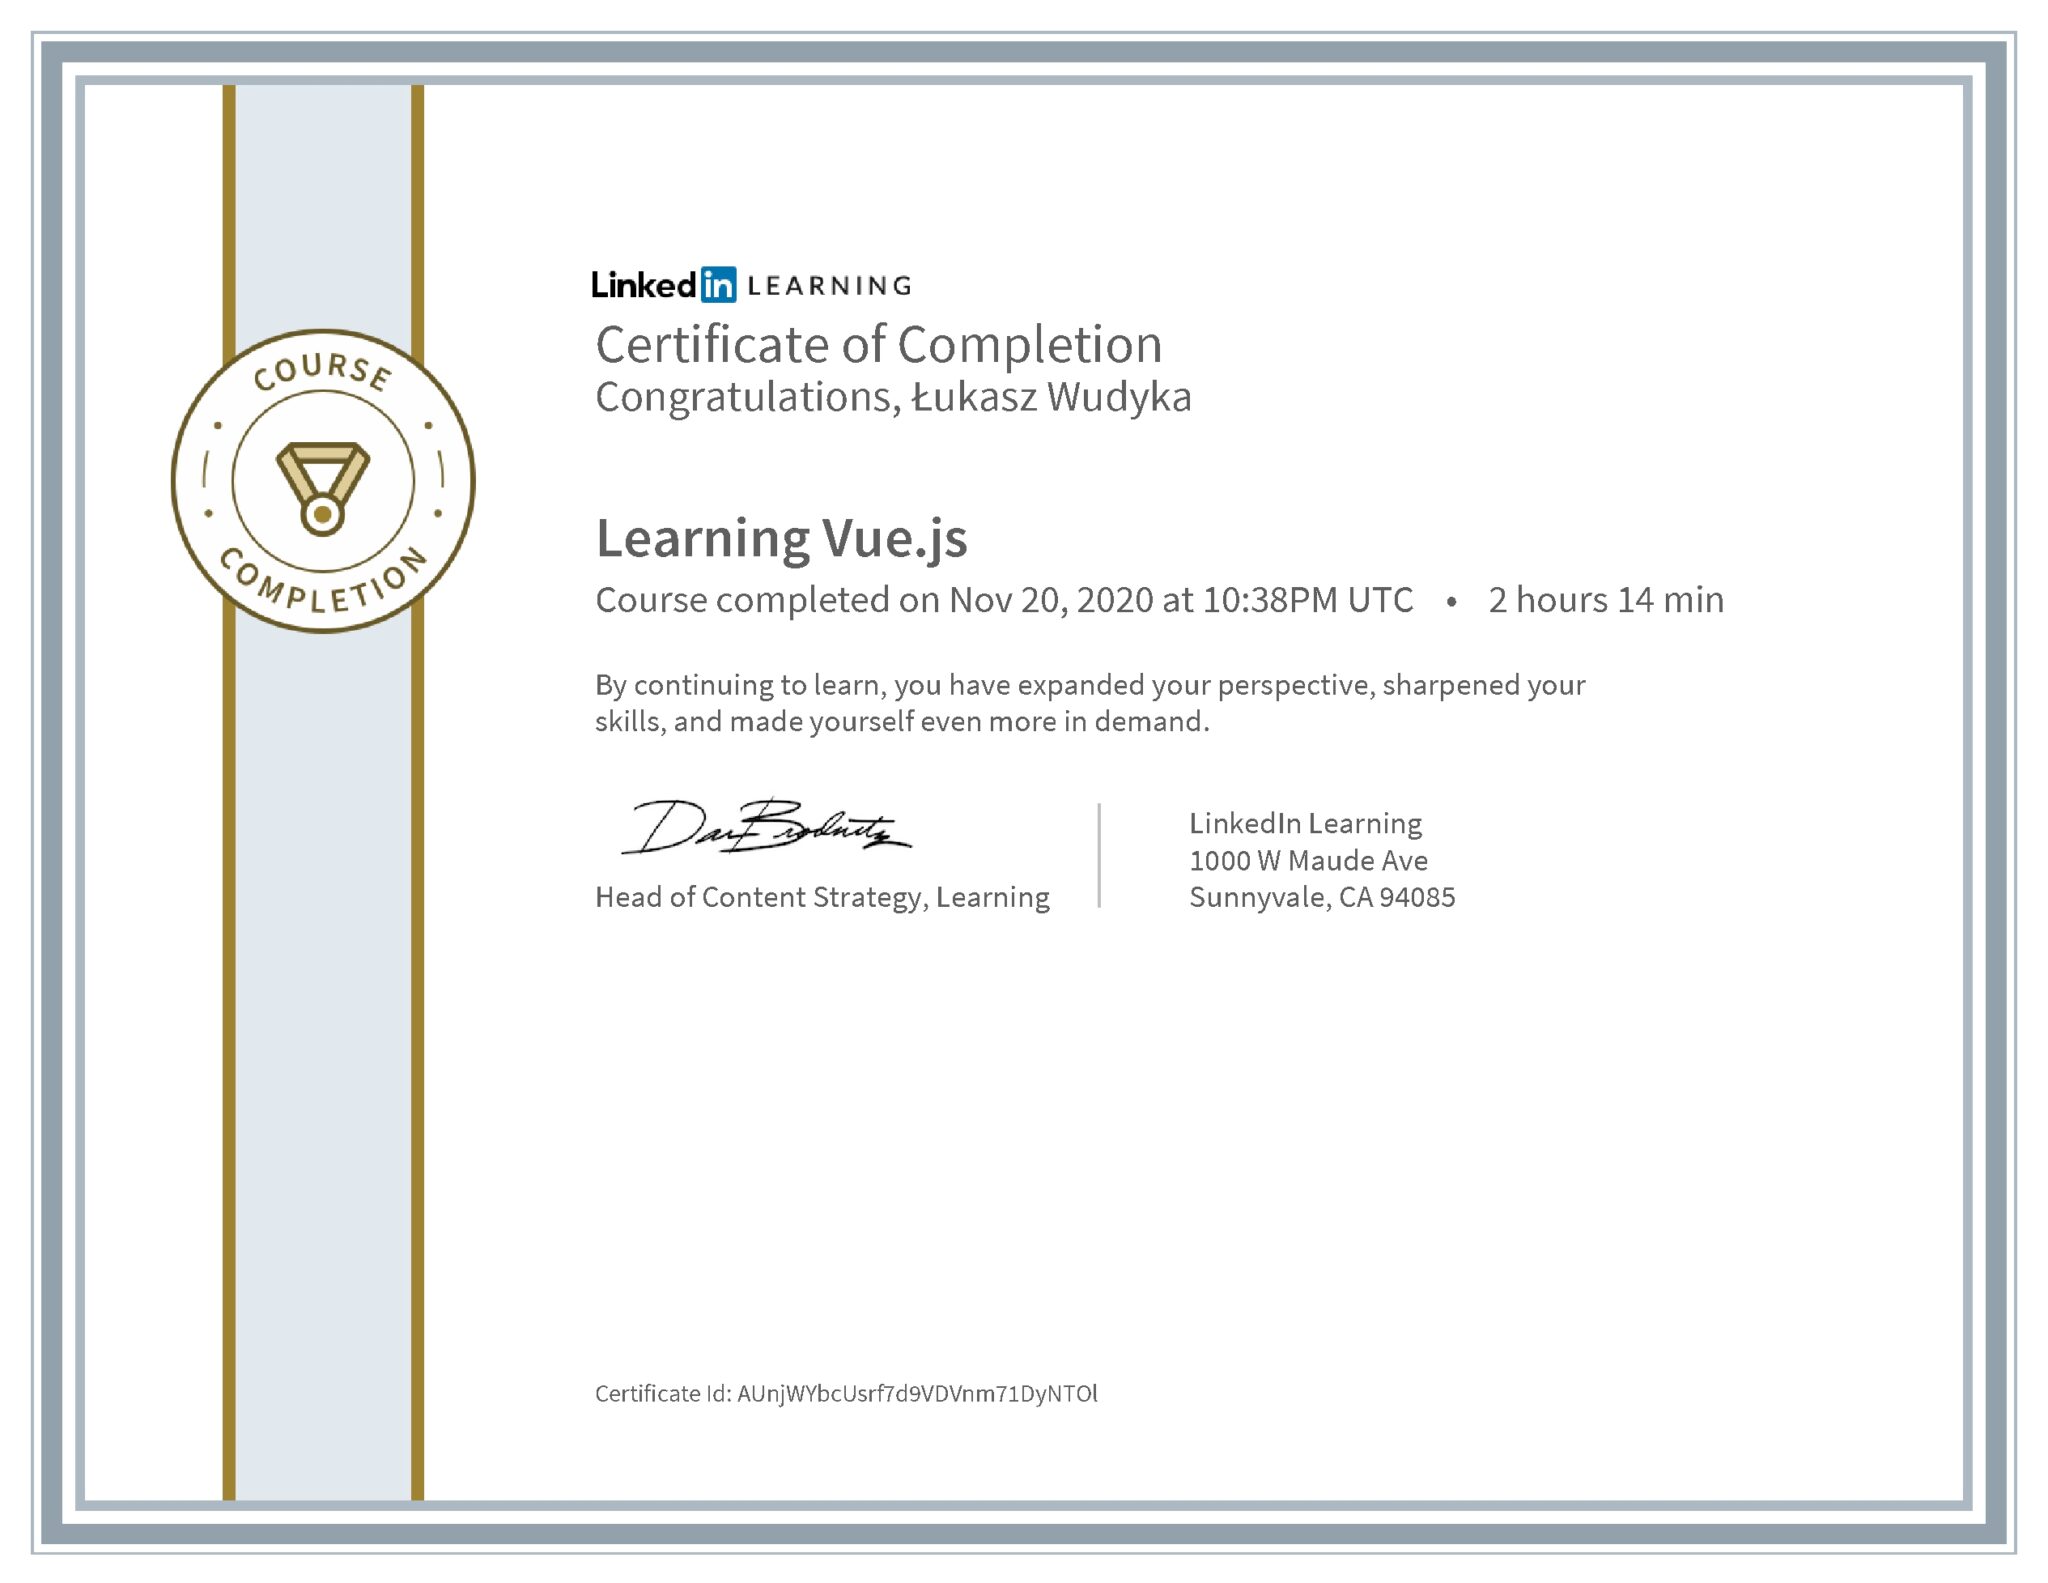 Łukasz Wudyka certyfikat LinkedIn Learning Vue.js